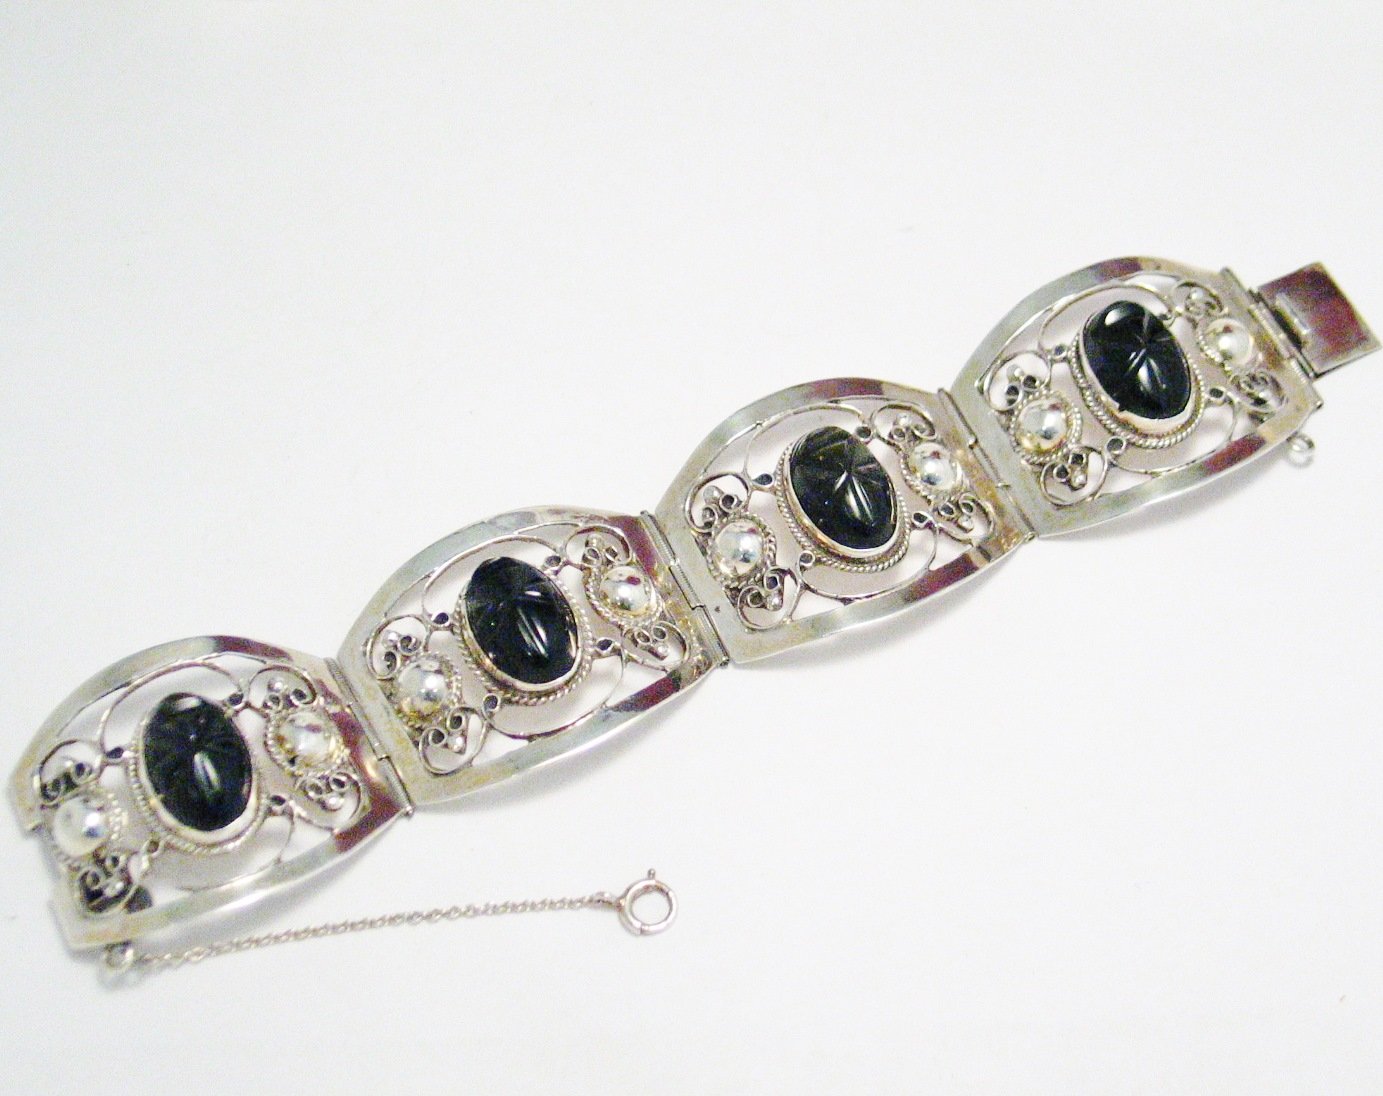 Wide Bracelet, Vintage 1950s FarFan Carved Golden Obsidian Stone Sterling Silver Bracelet